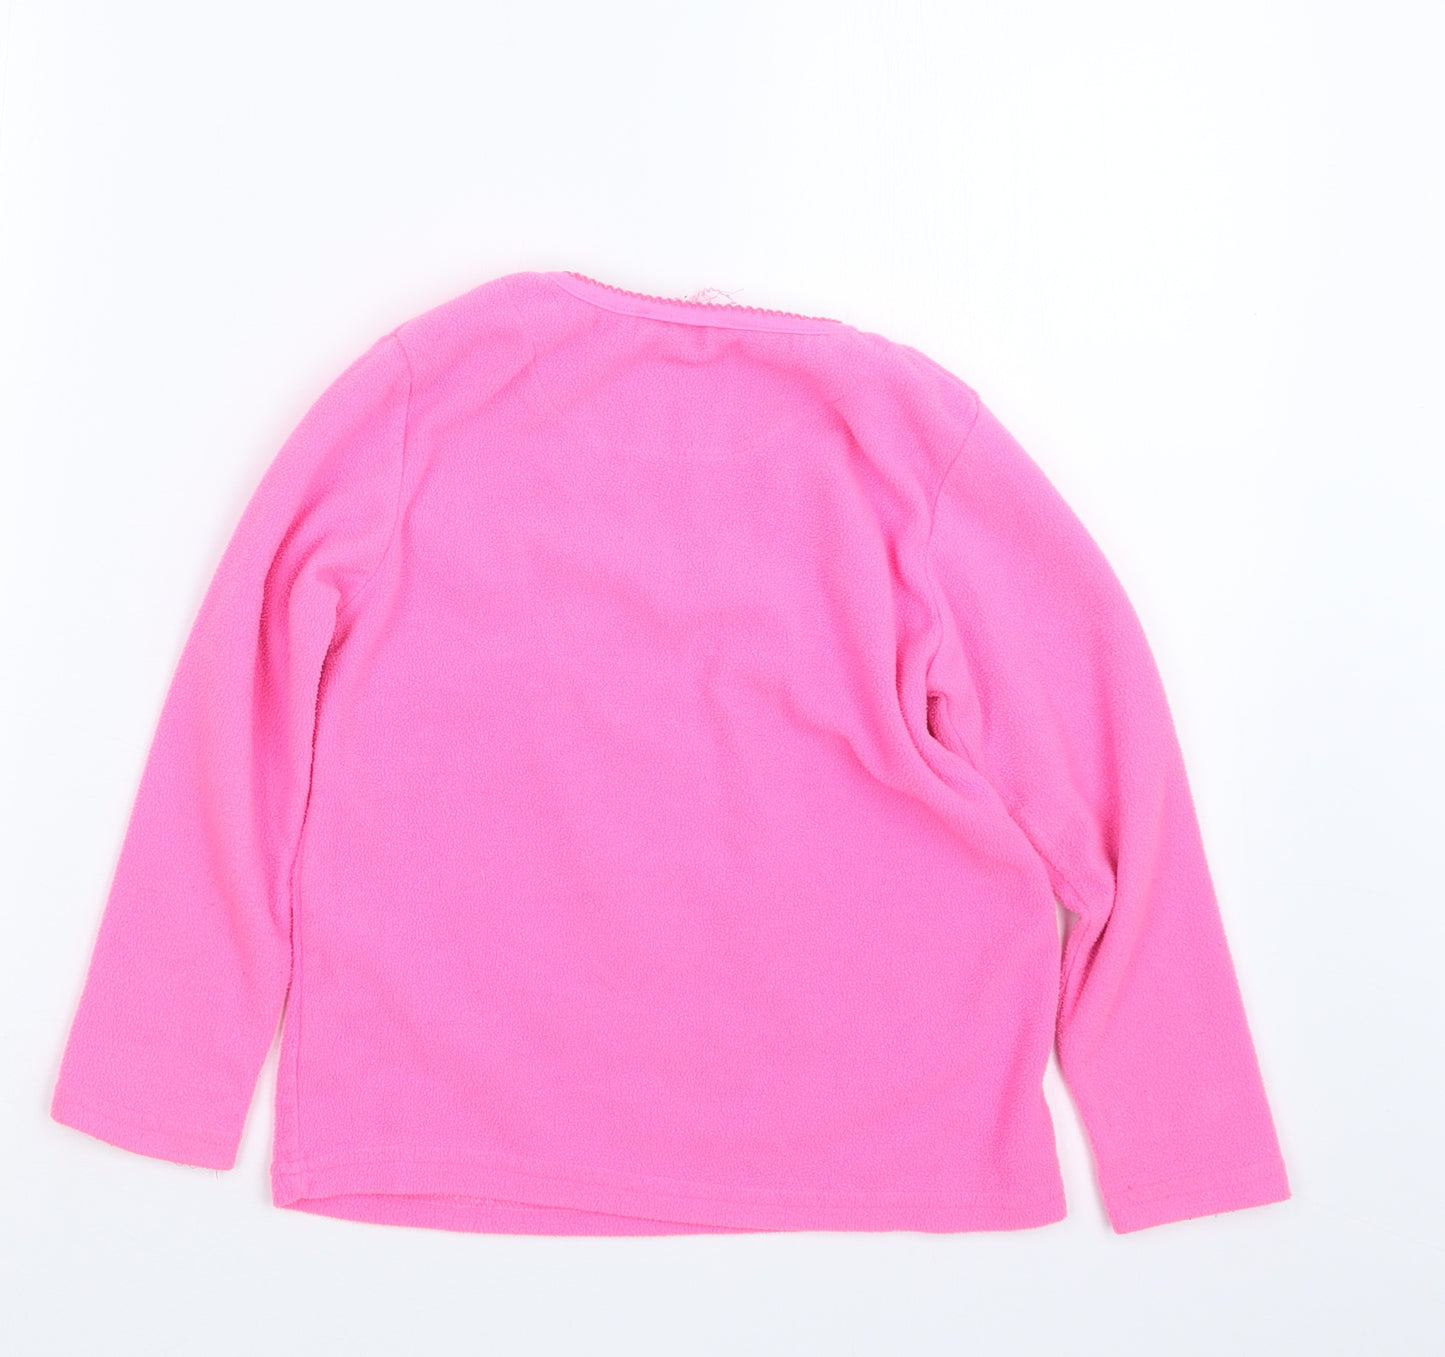 Primark Girls Pink Geometric  Top Pyjama Top Size 7-8 Years  - Minnie Mouse